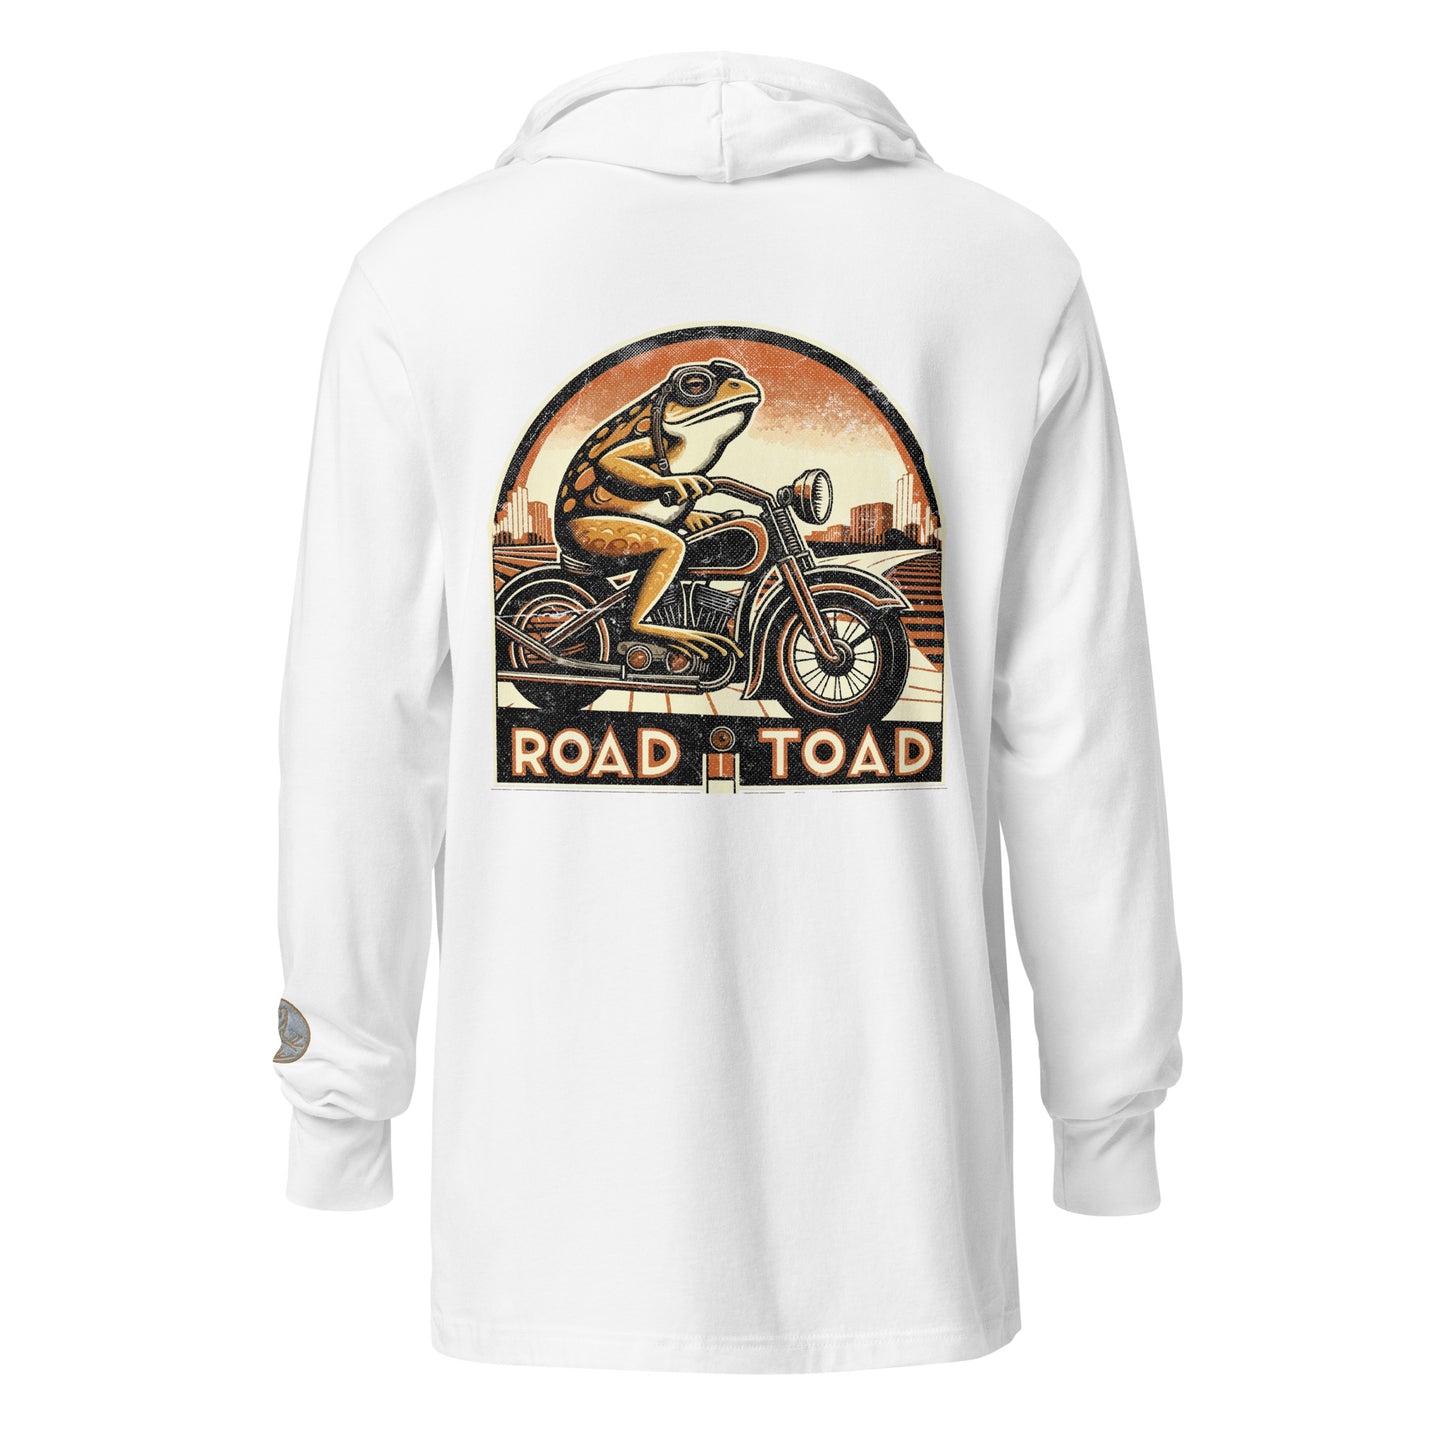 Road Toad Hooded Long-sleeve Tee